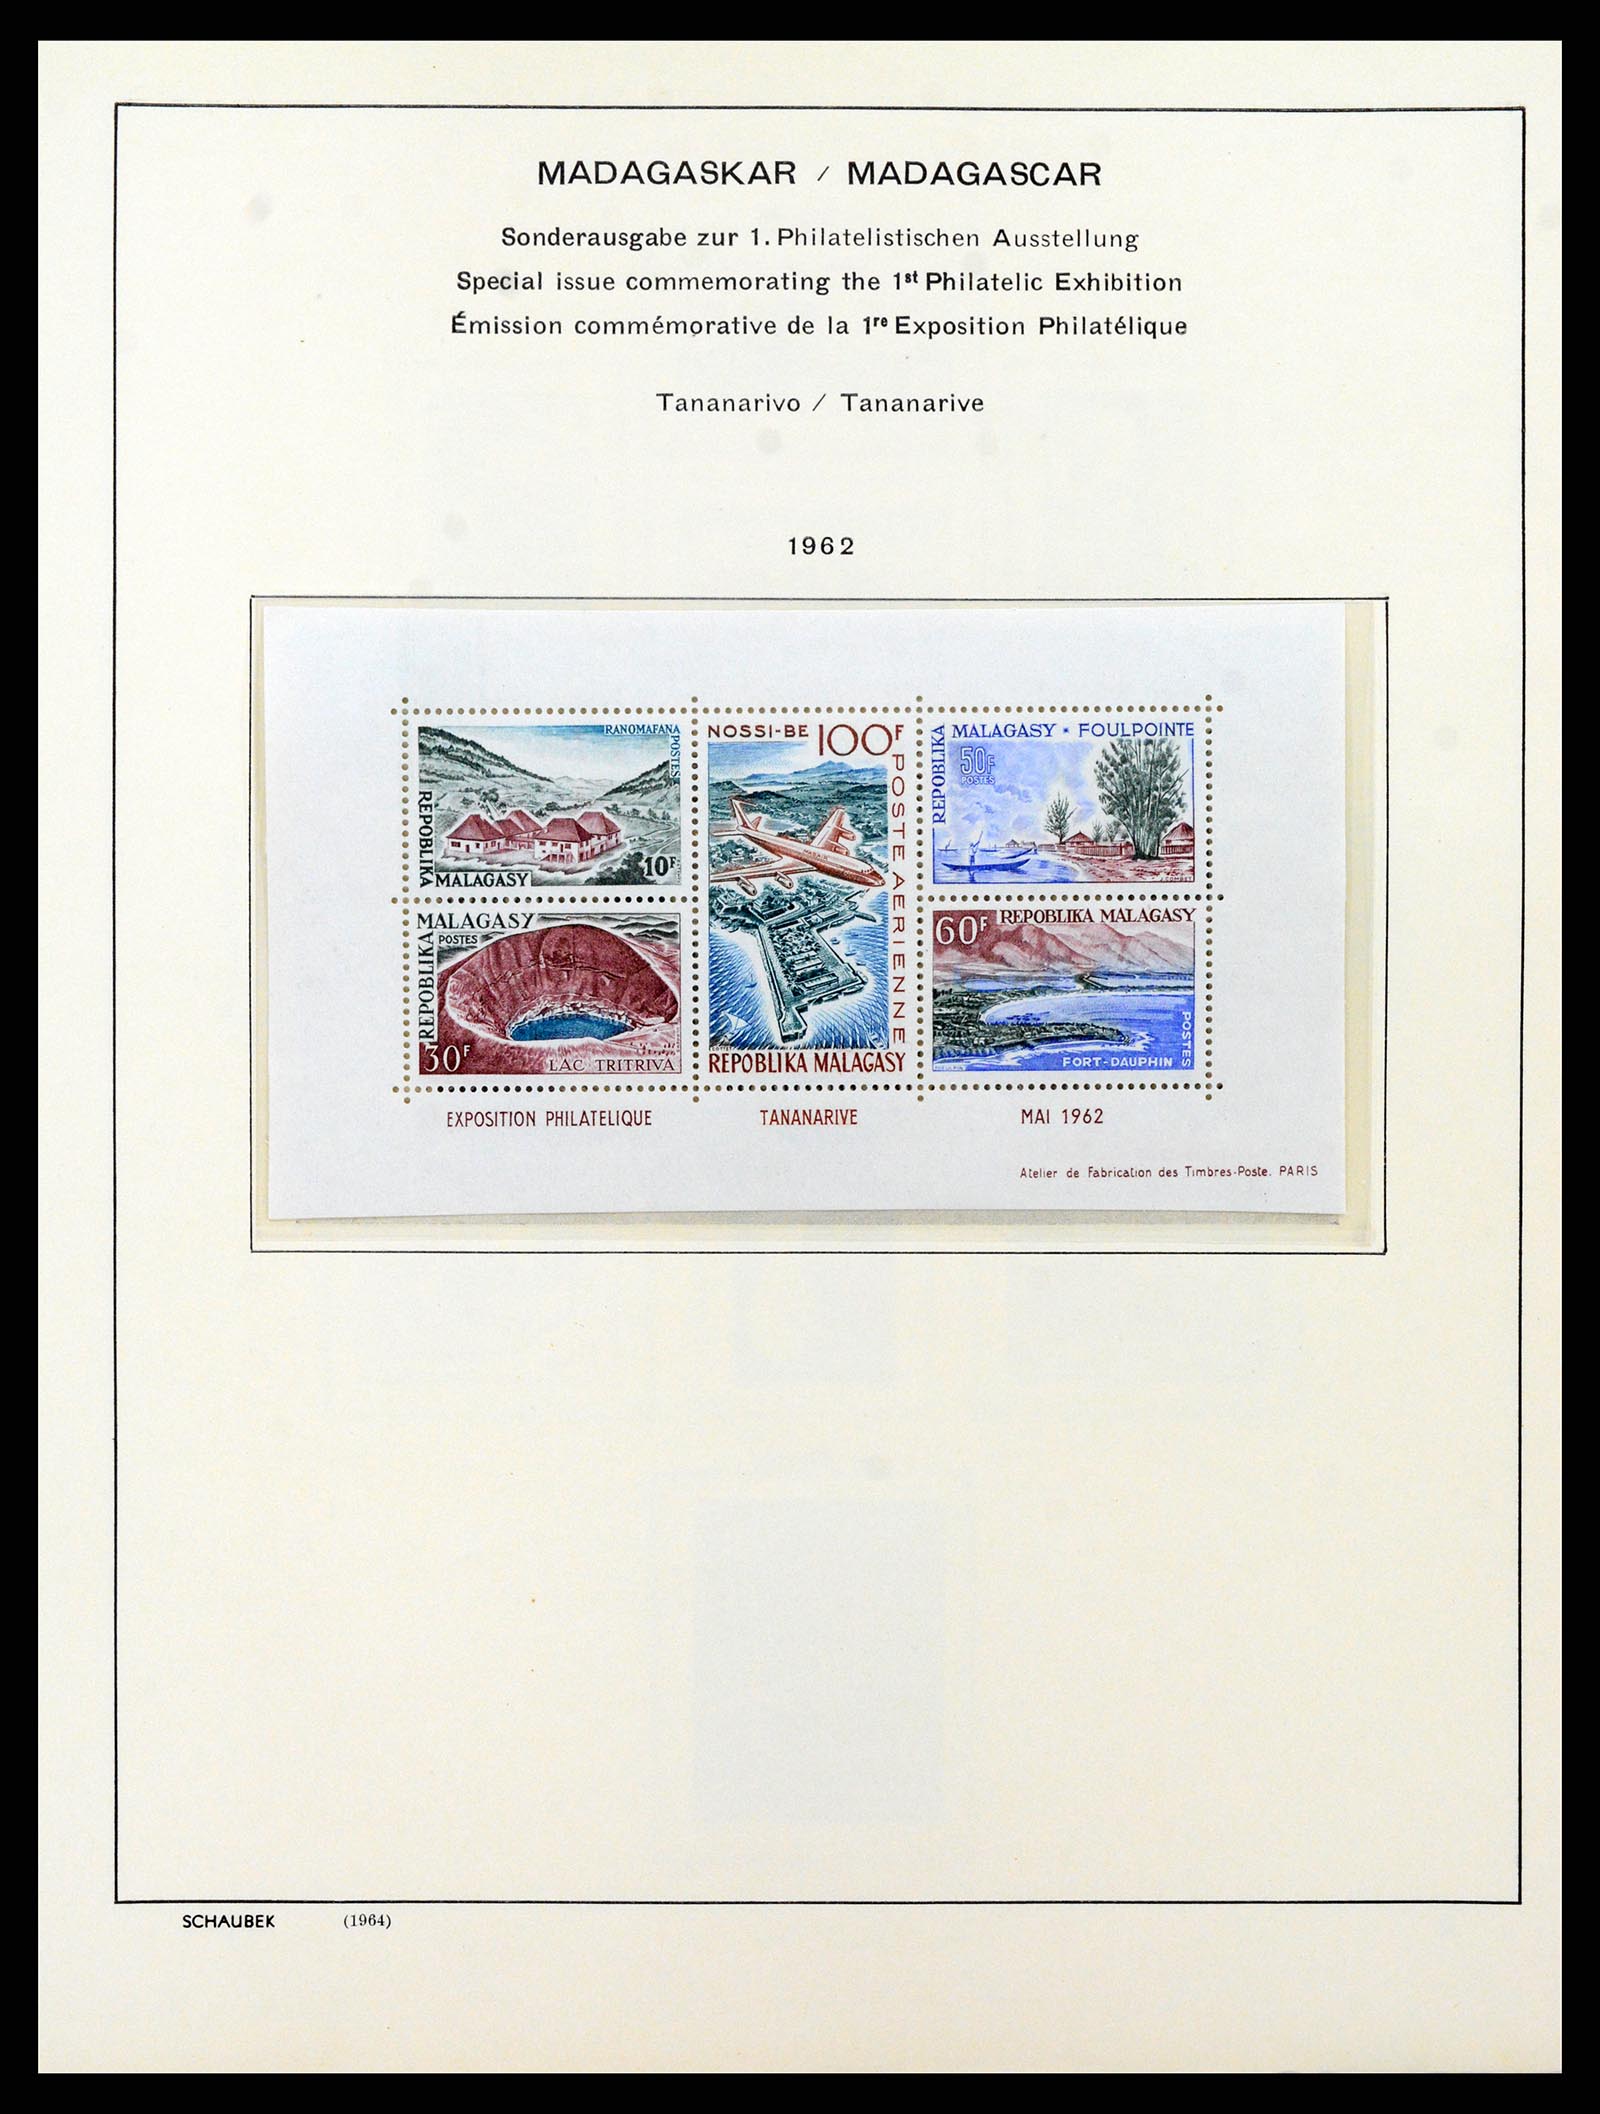 37929 098 - Stamp Collection 37929 Madagascar 1889-2000.